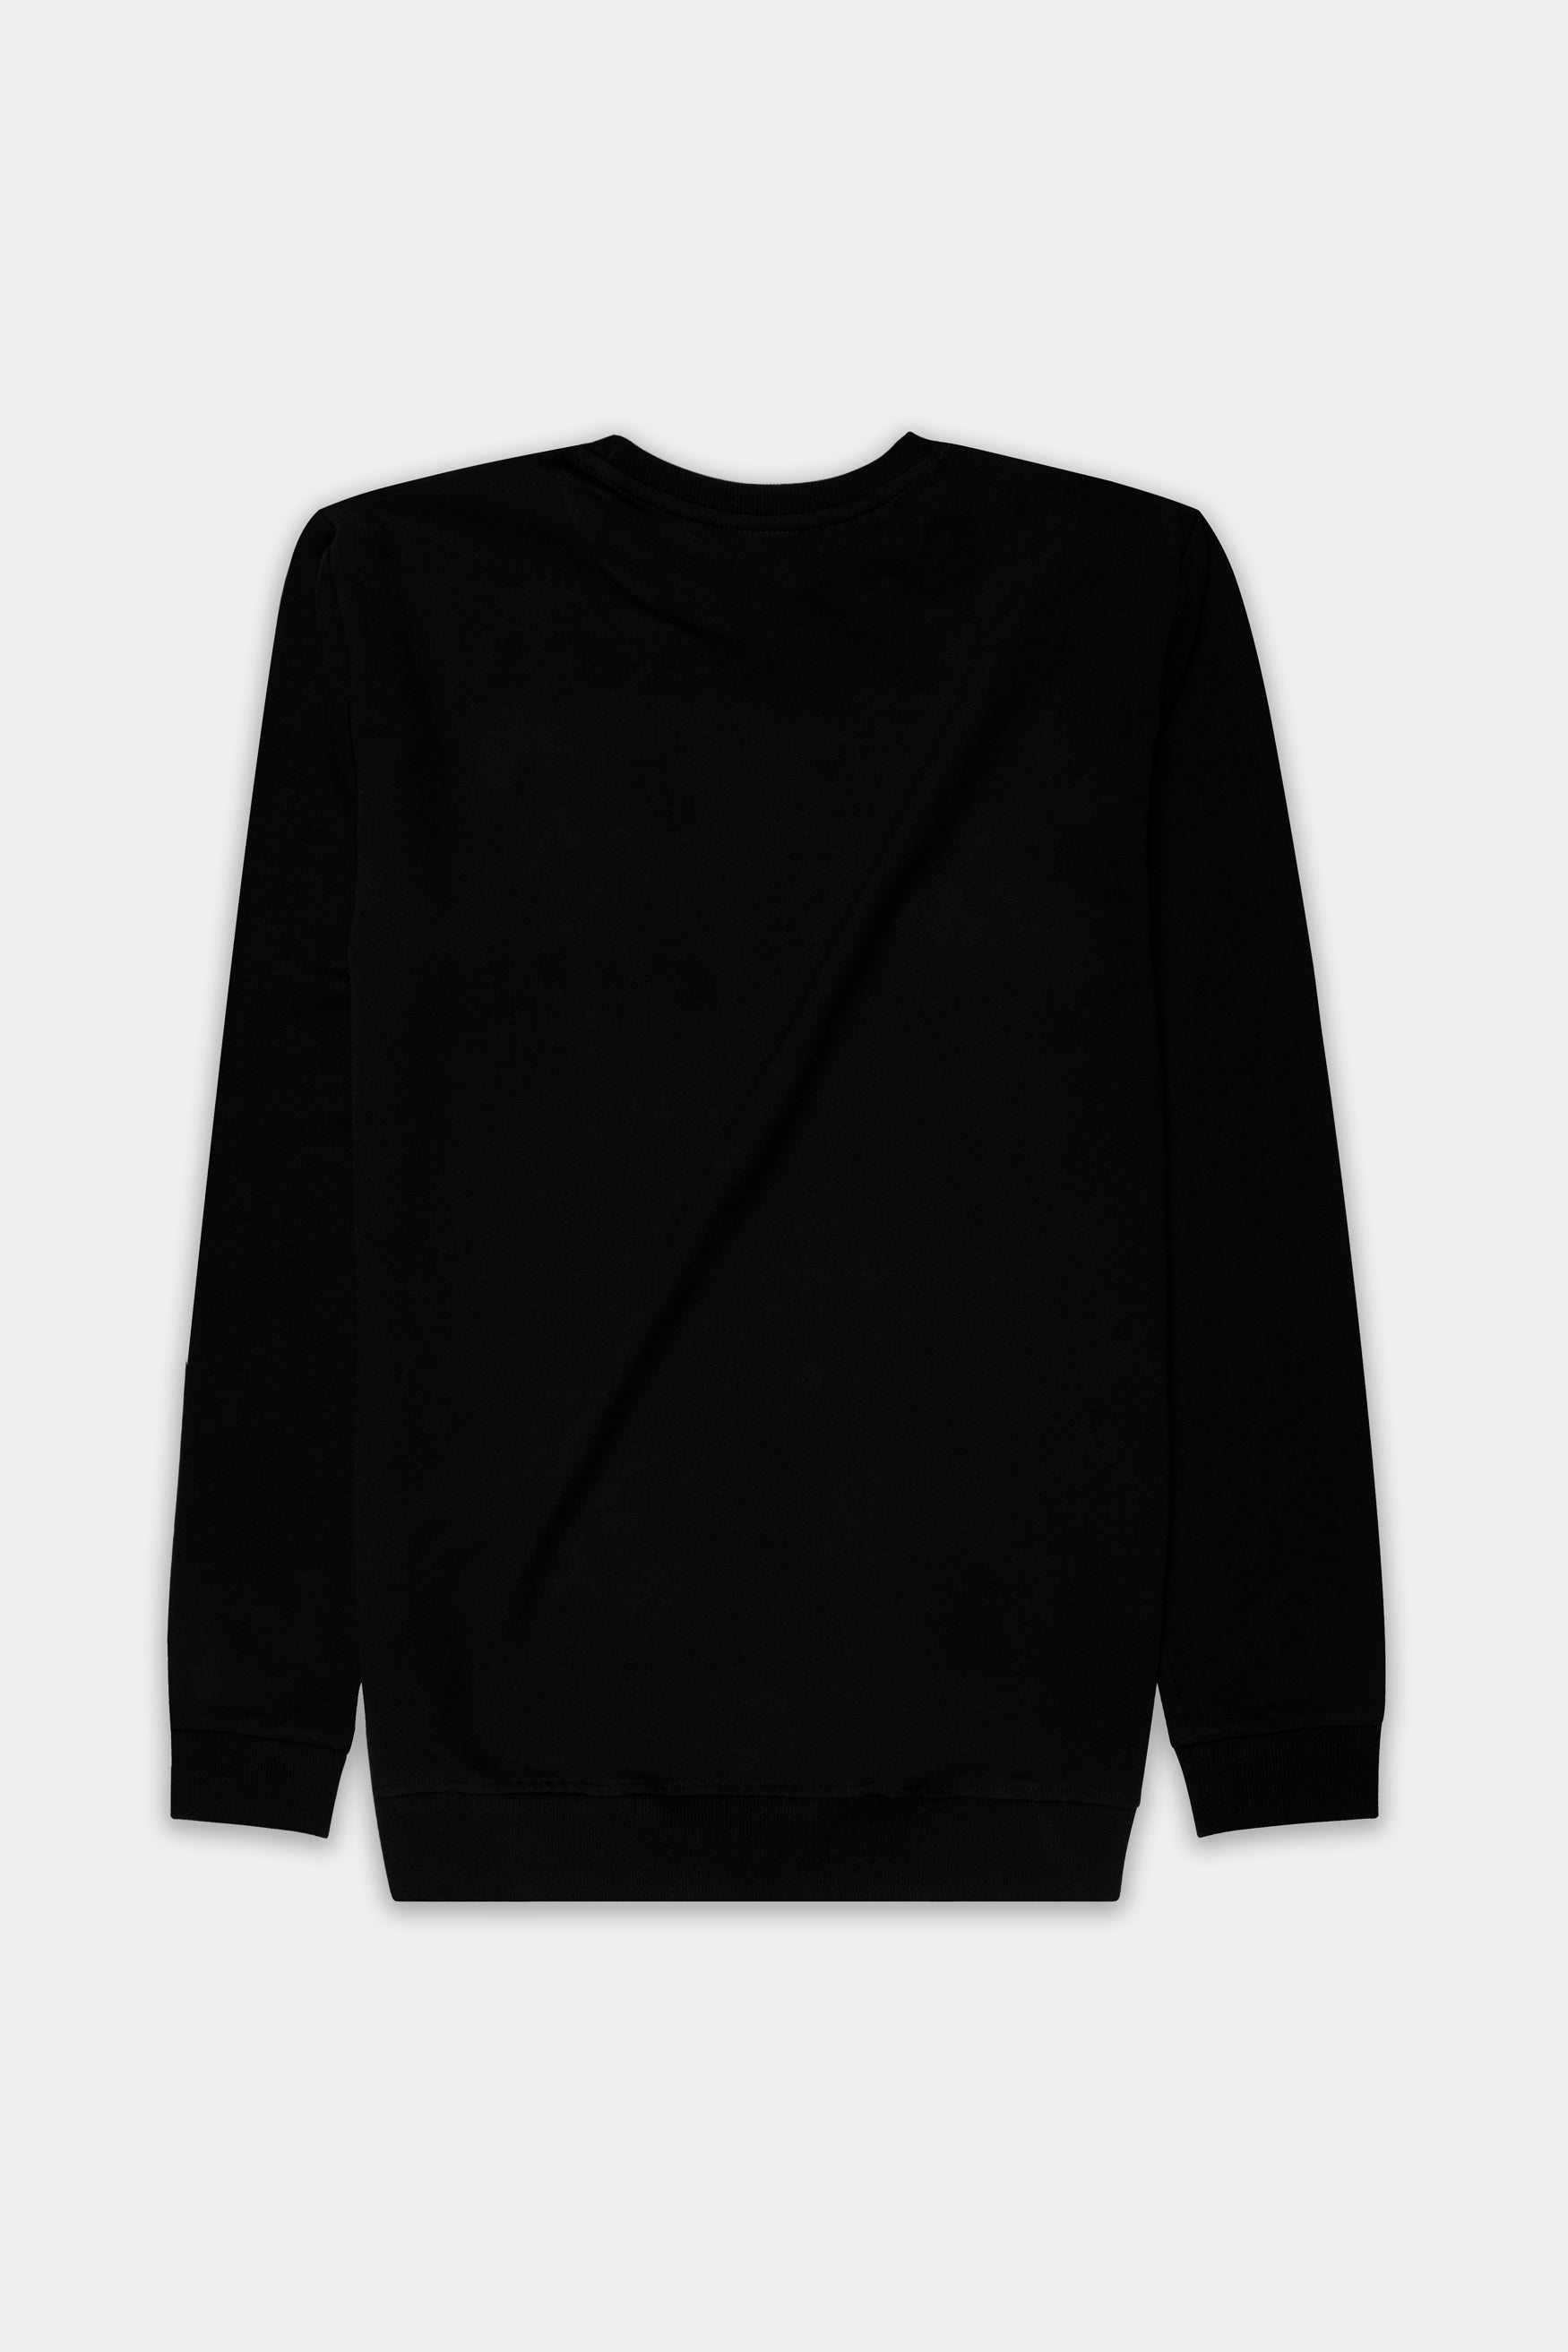 Jade Black Premium Cotton Sweatshirt